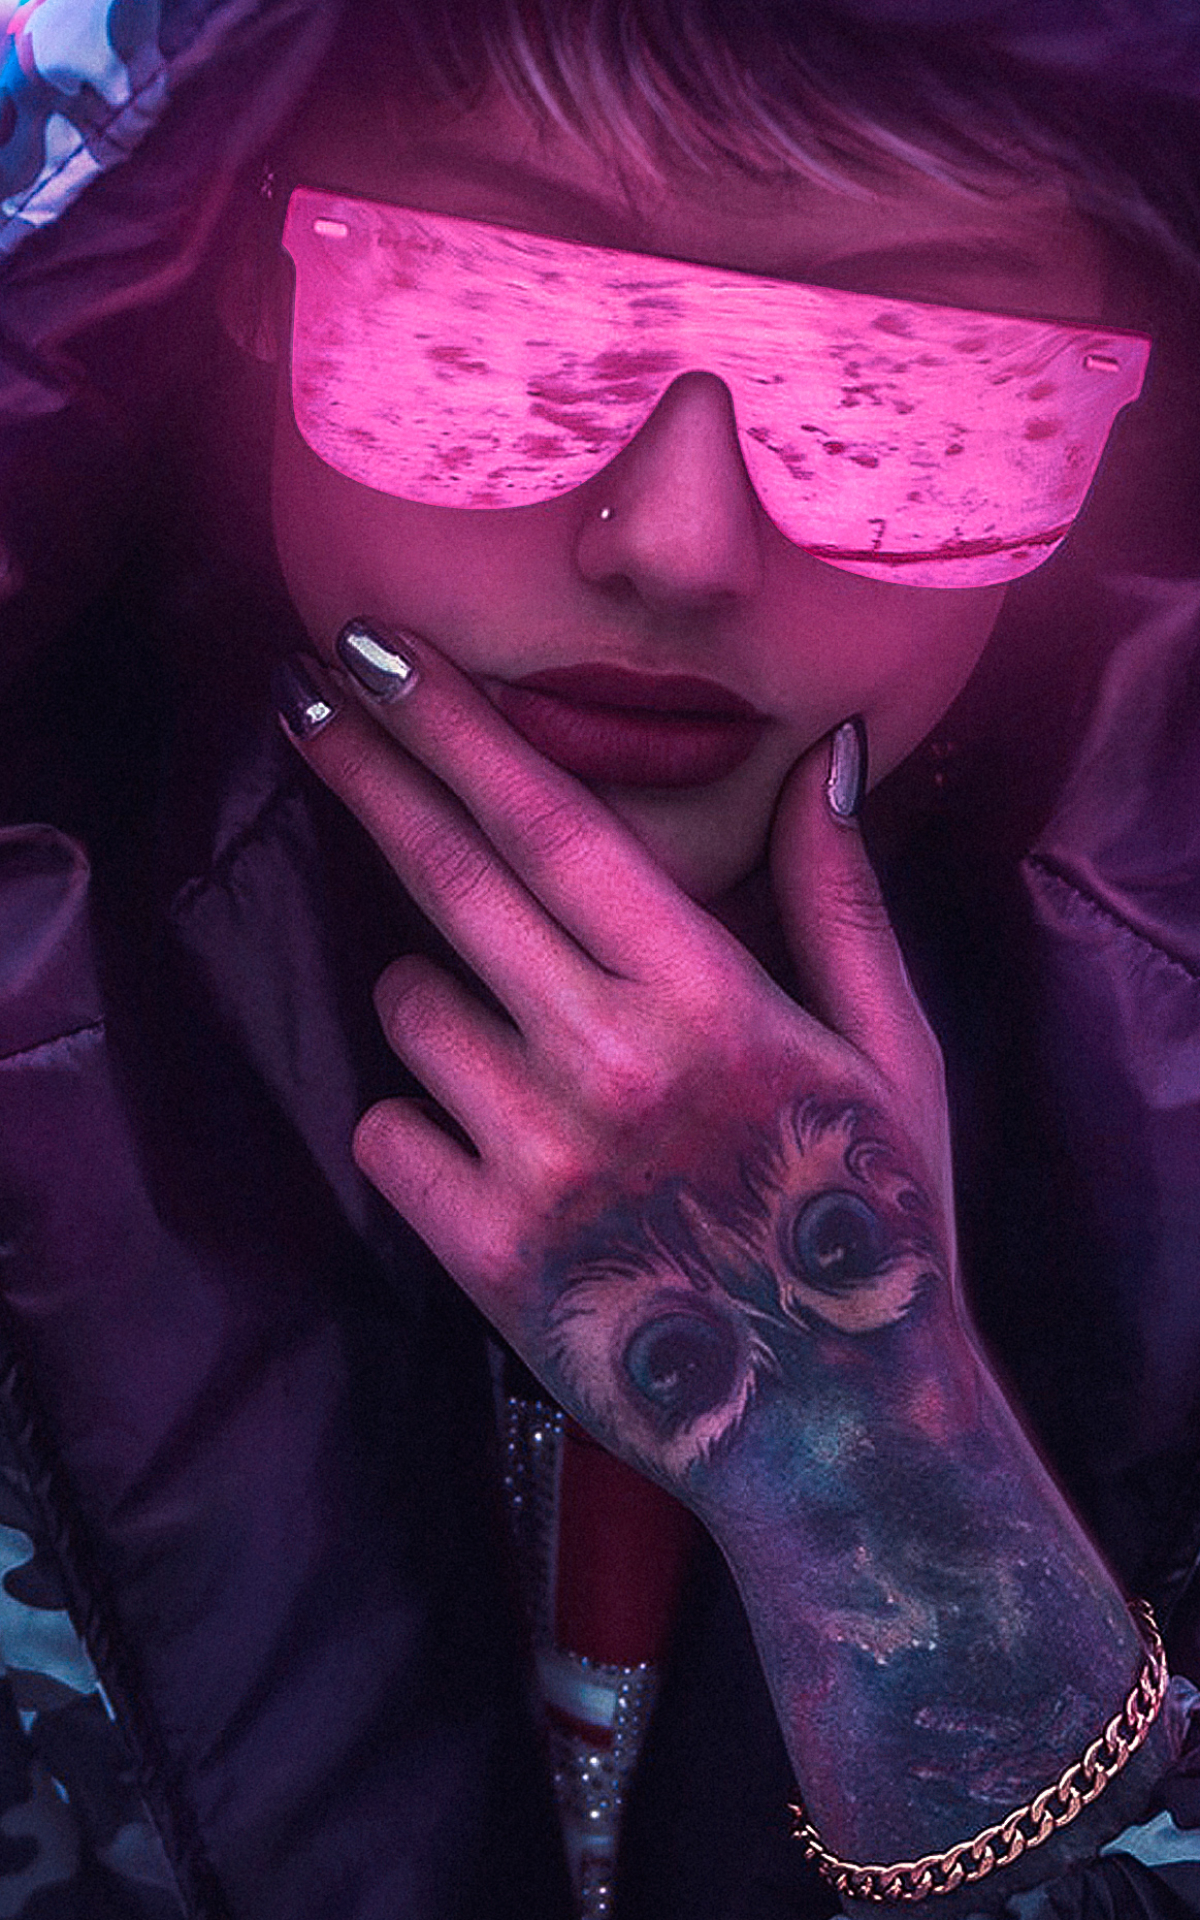 Mobile wallpaper: Cyberpunk, Tattoo, Sci Fi, Hood, Sunglasses